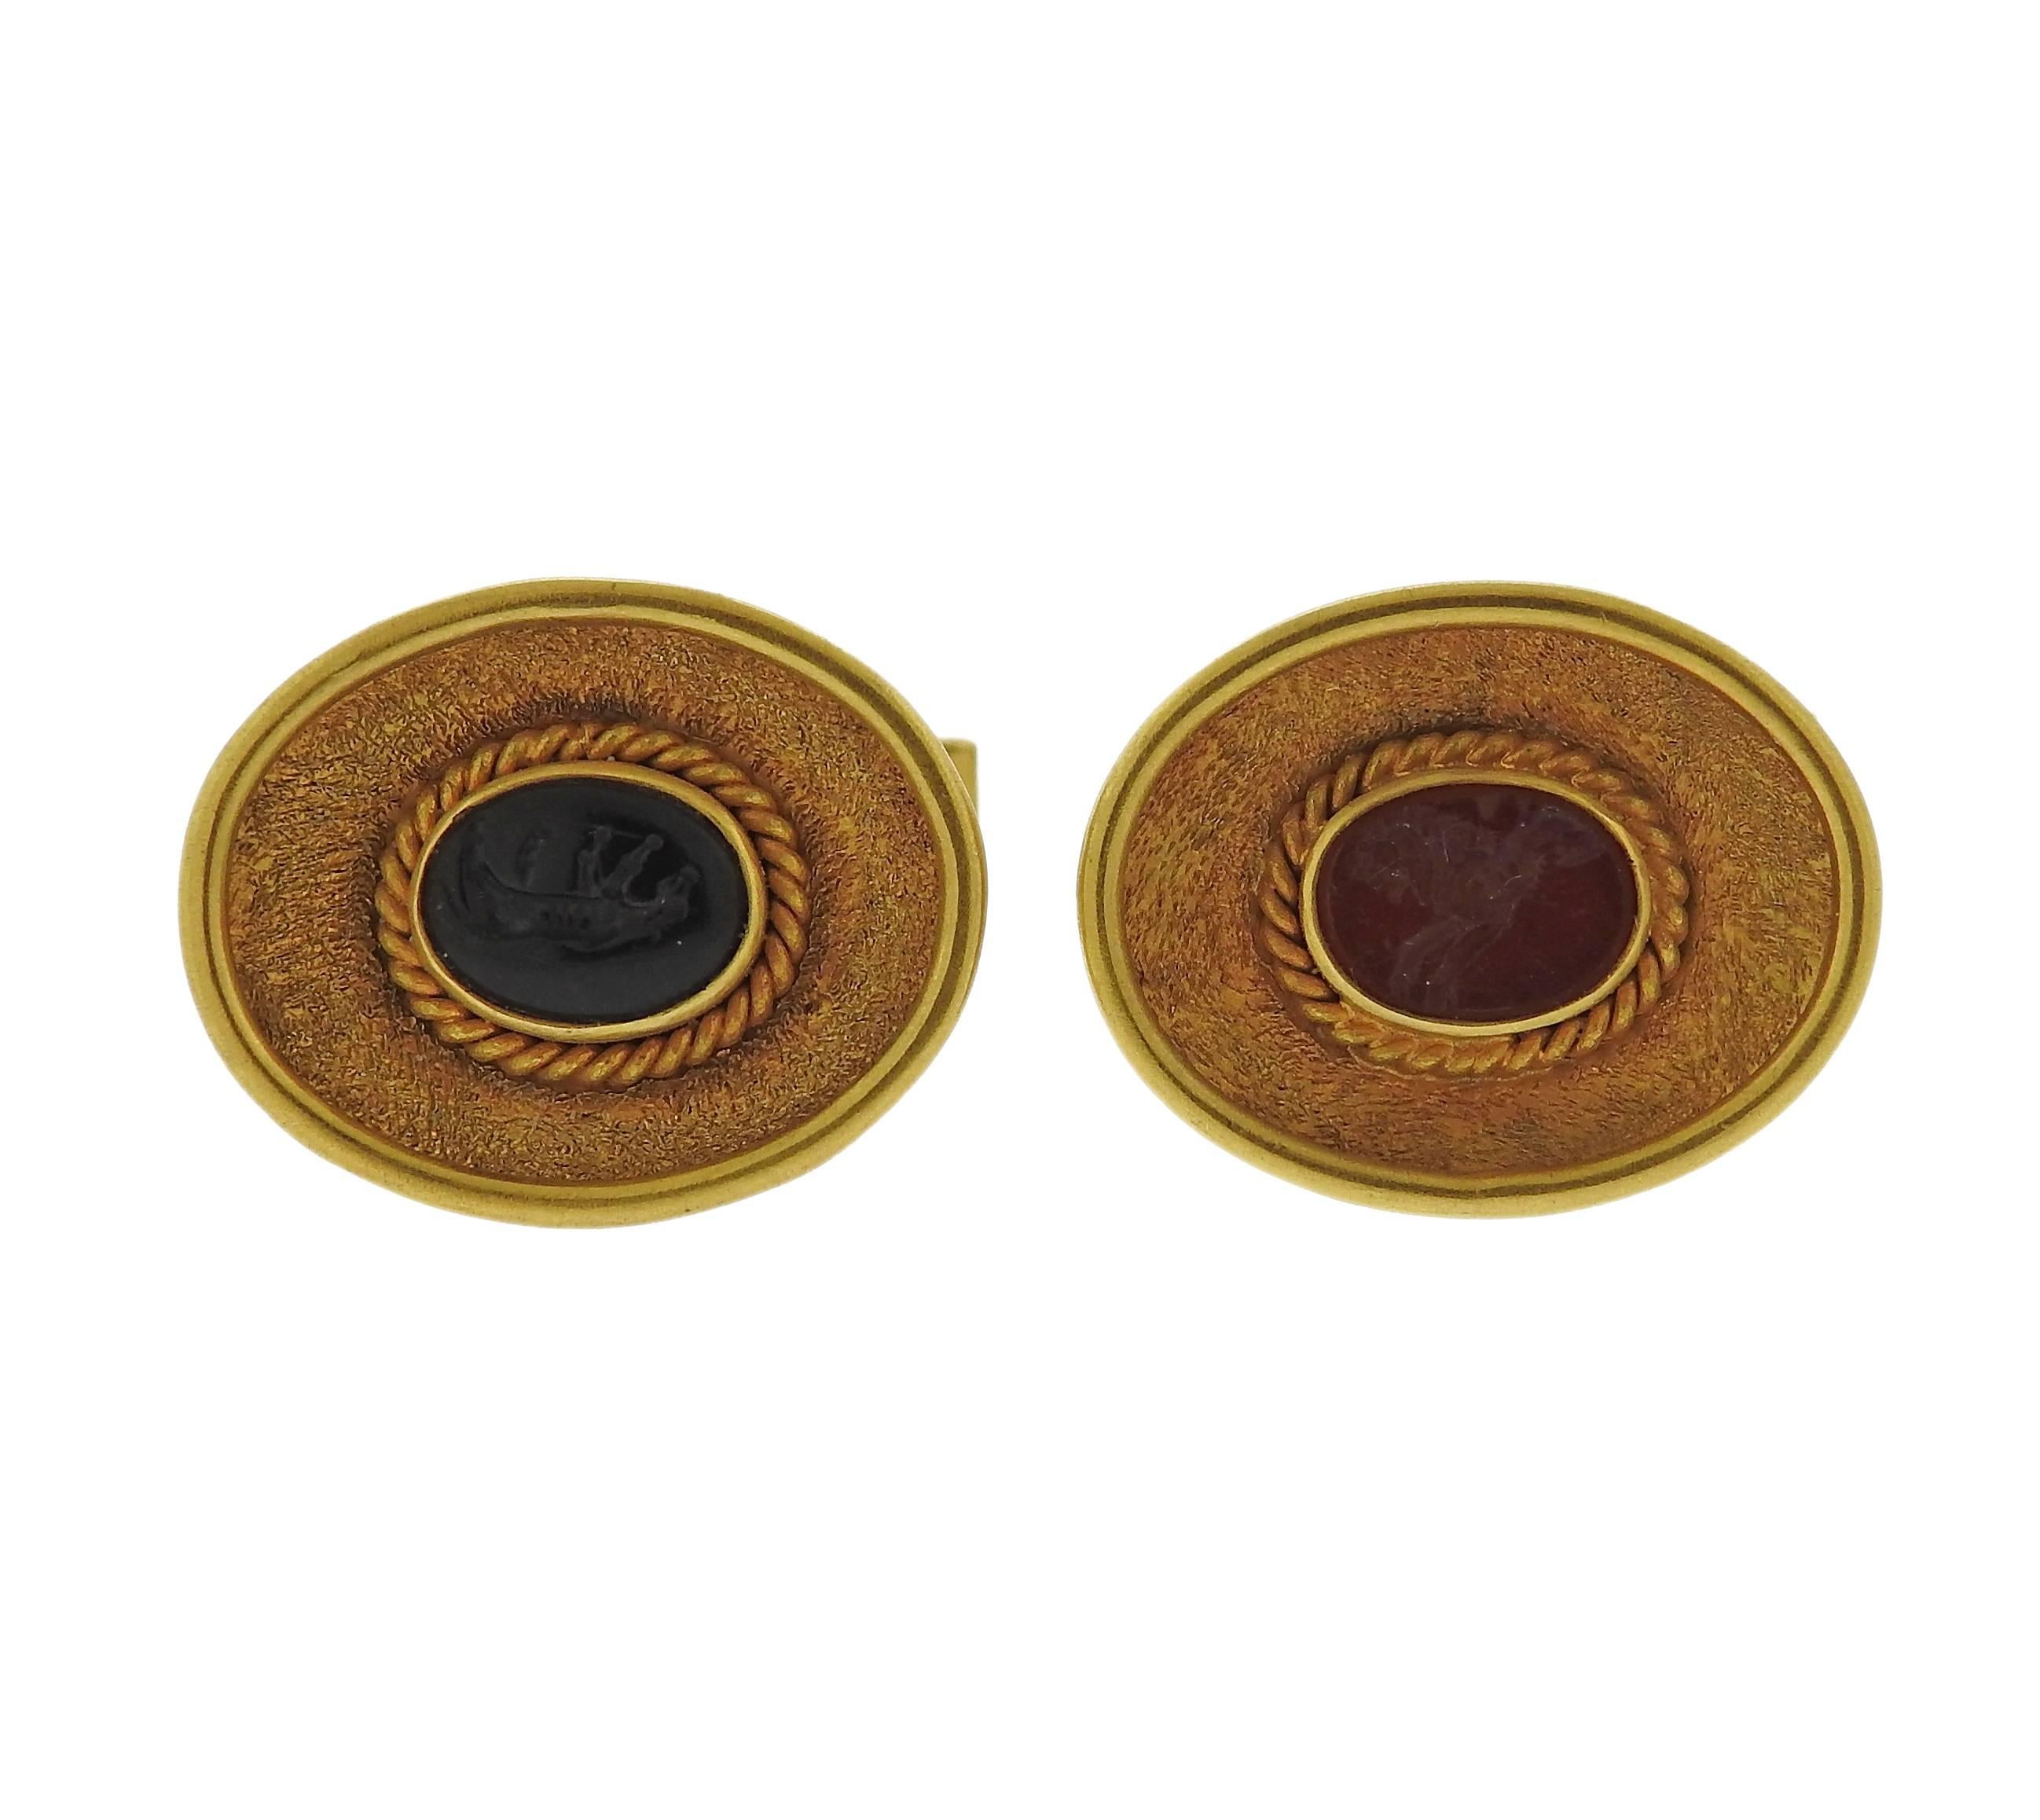 Pair of 14k gold cufflinks, set with Ancient Roman hanrdstone intaglio. Cufflink top is 20mm x 15mm. Weight - 14.2 grams. 